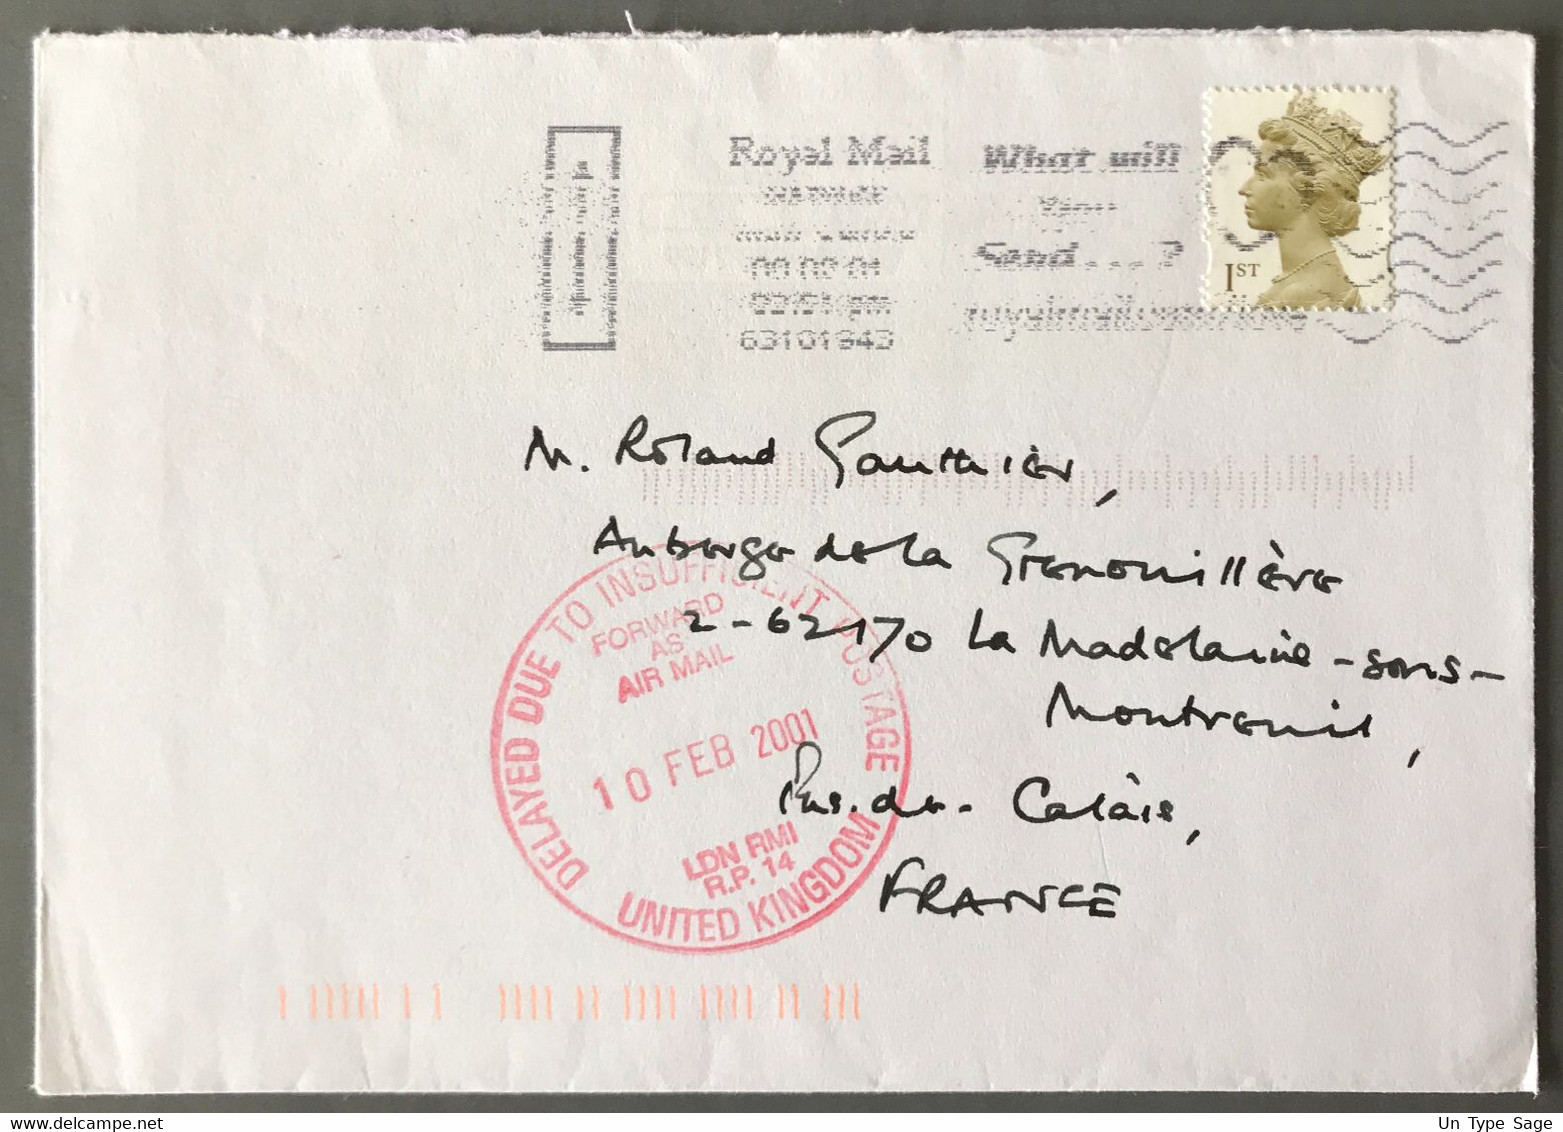 Grande-Bretagne, Type Machin 1st Sur Enveloppe, CACHET "DELAYED DUE TO INSUFFICIENT POSTAGE" - (W1204) - Lettres & Documents